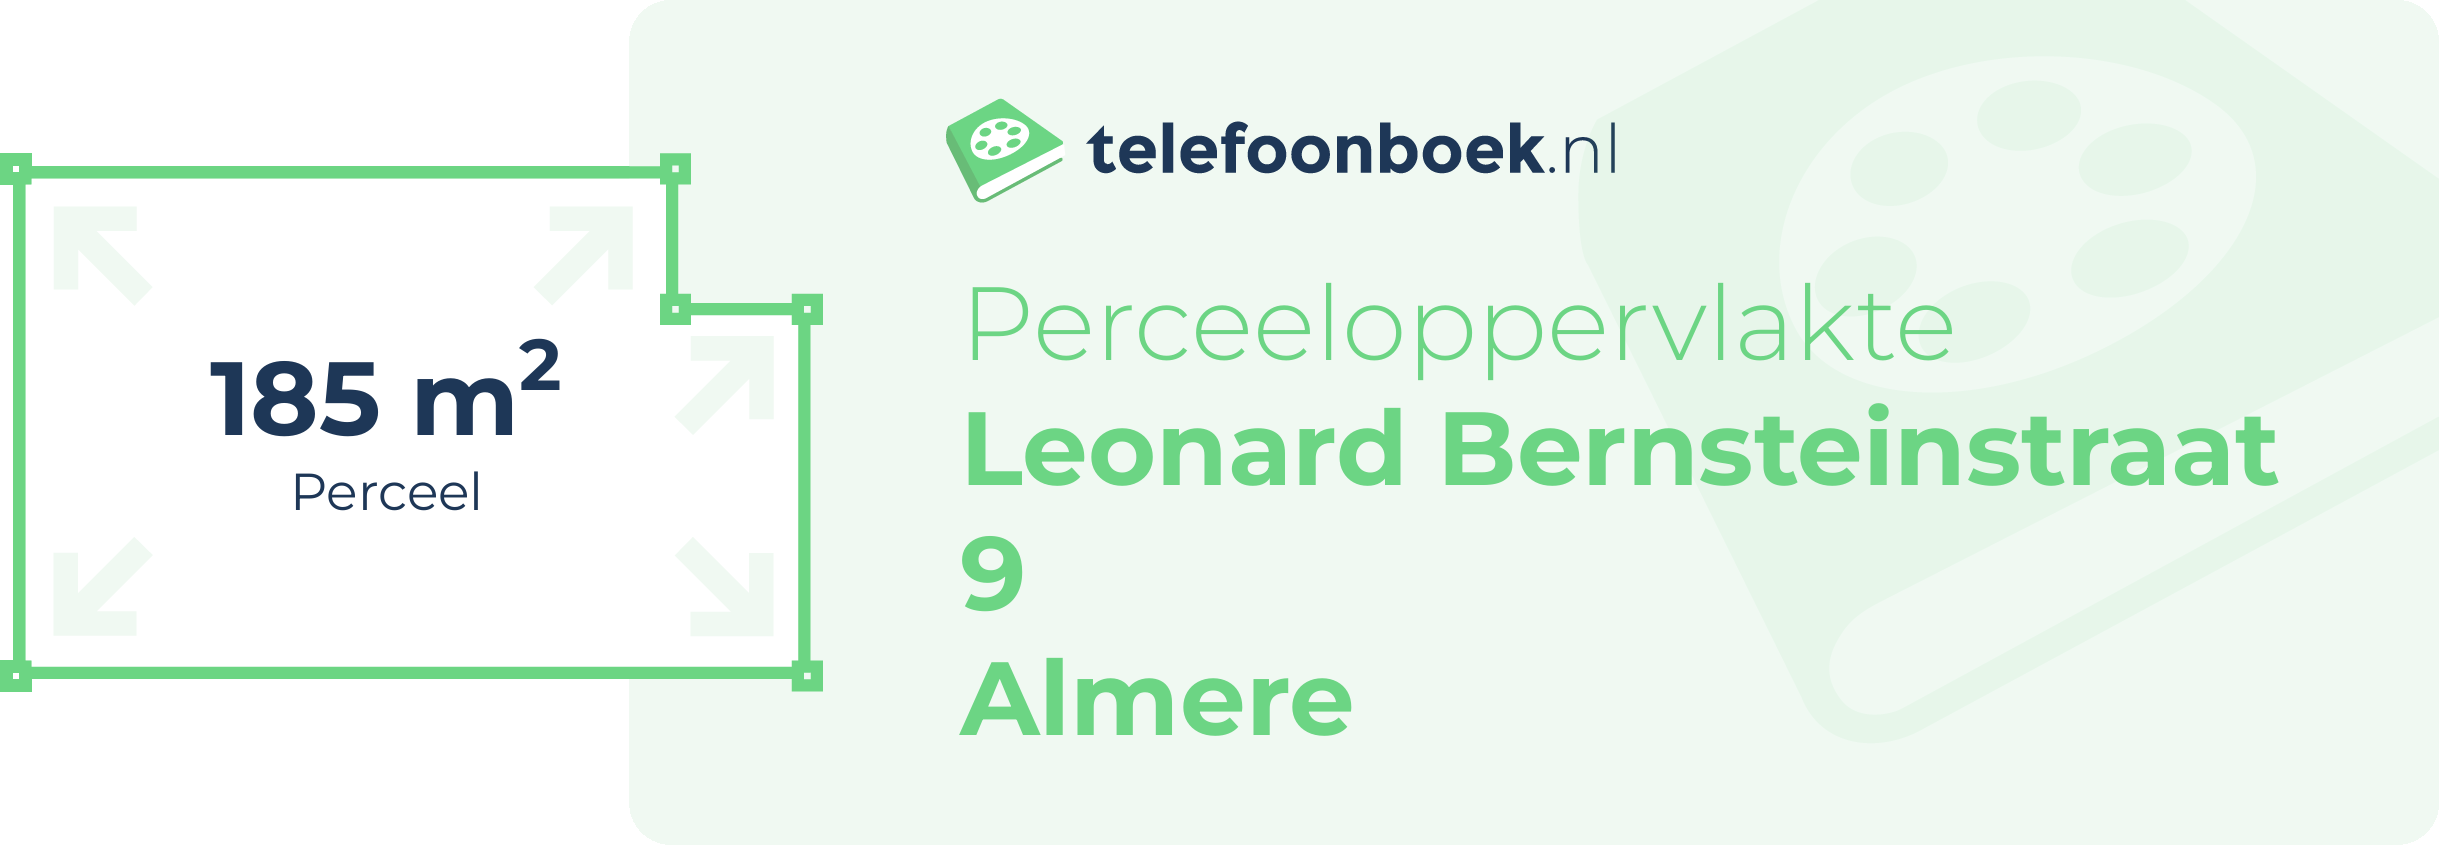 Perceeloppervlakte Leonard Bernsteinstraat 9 Almere